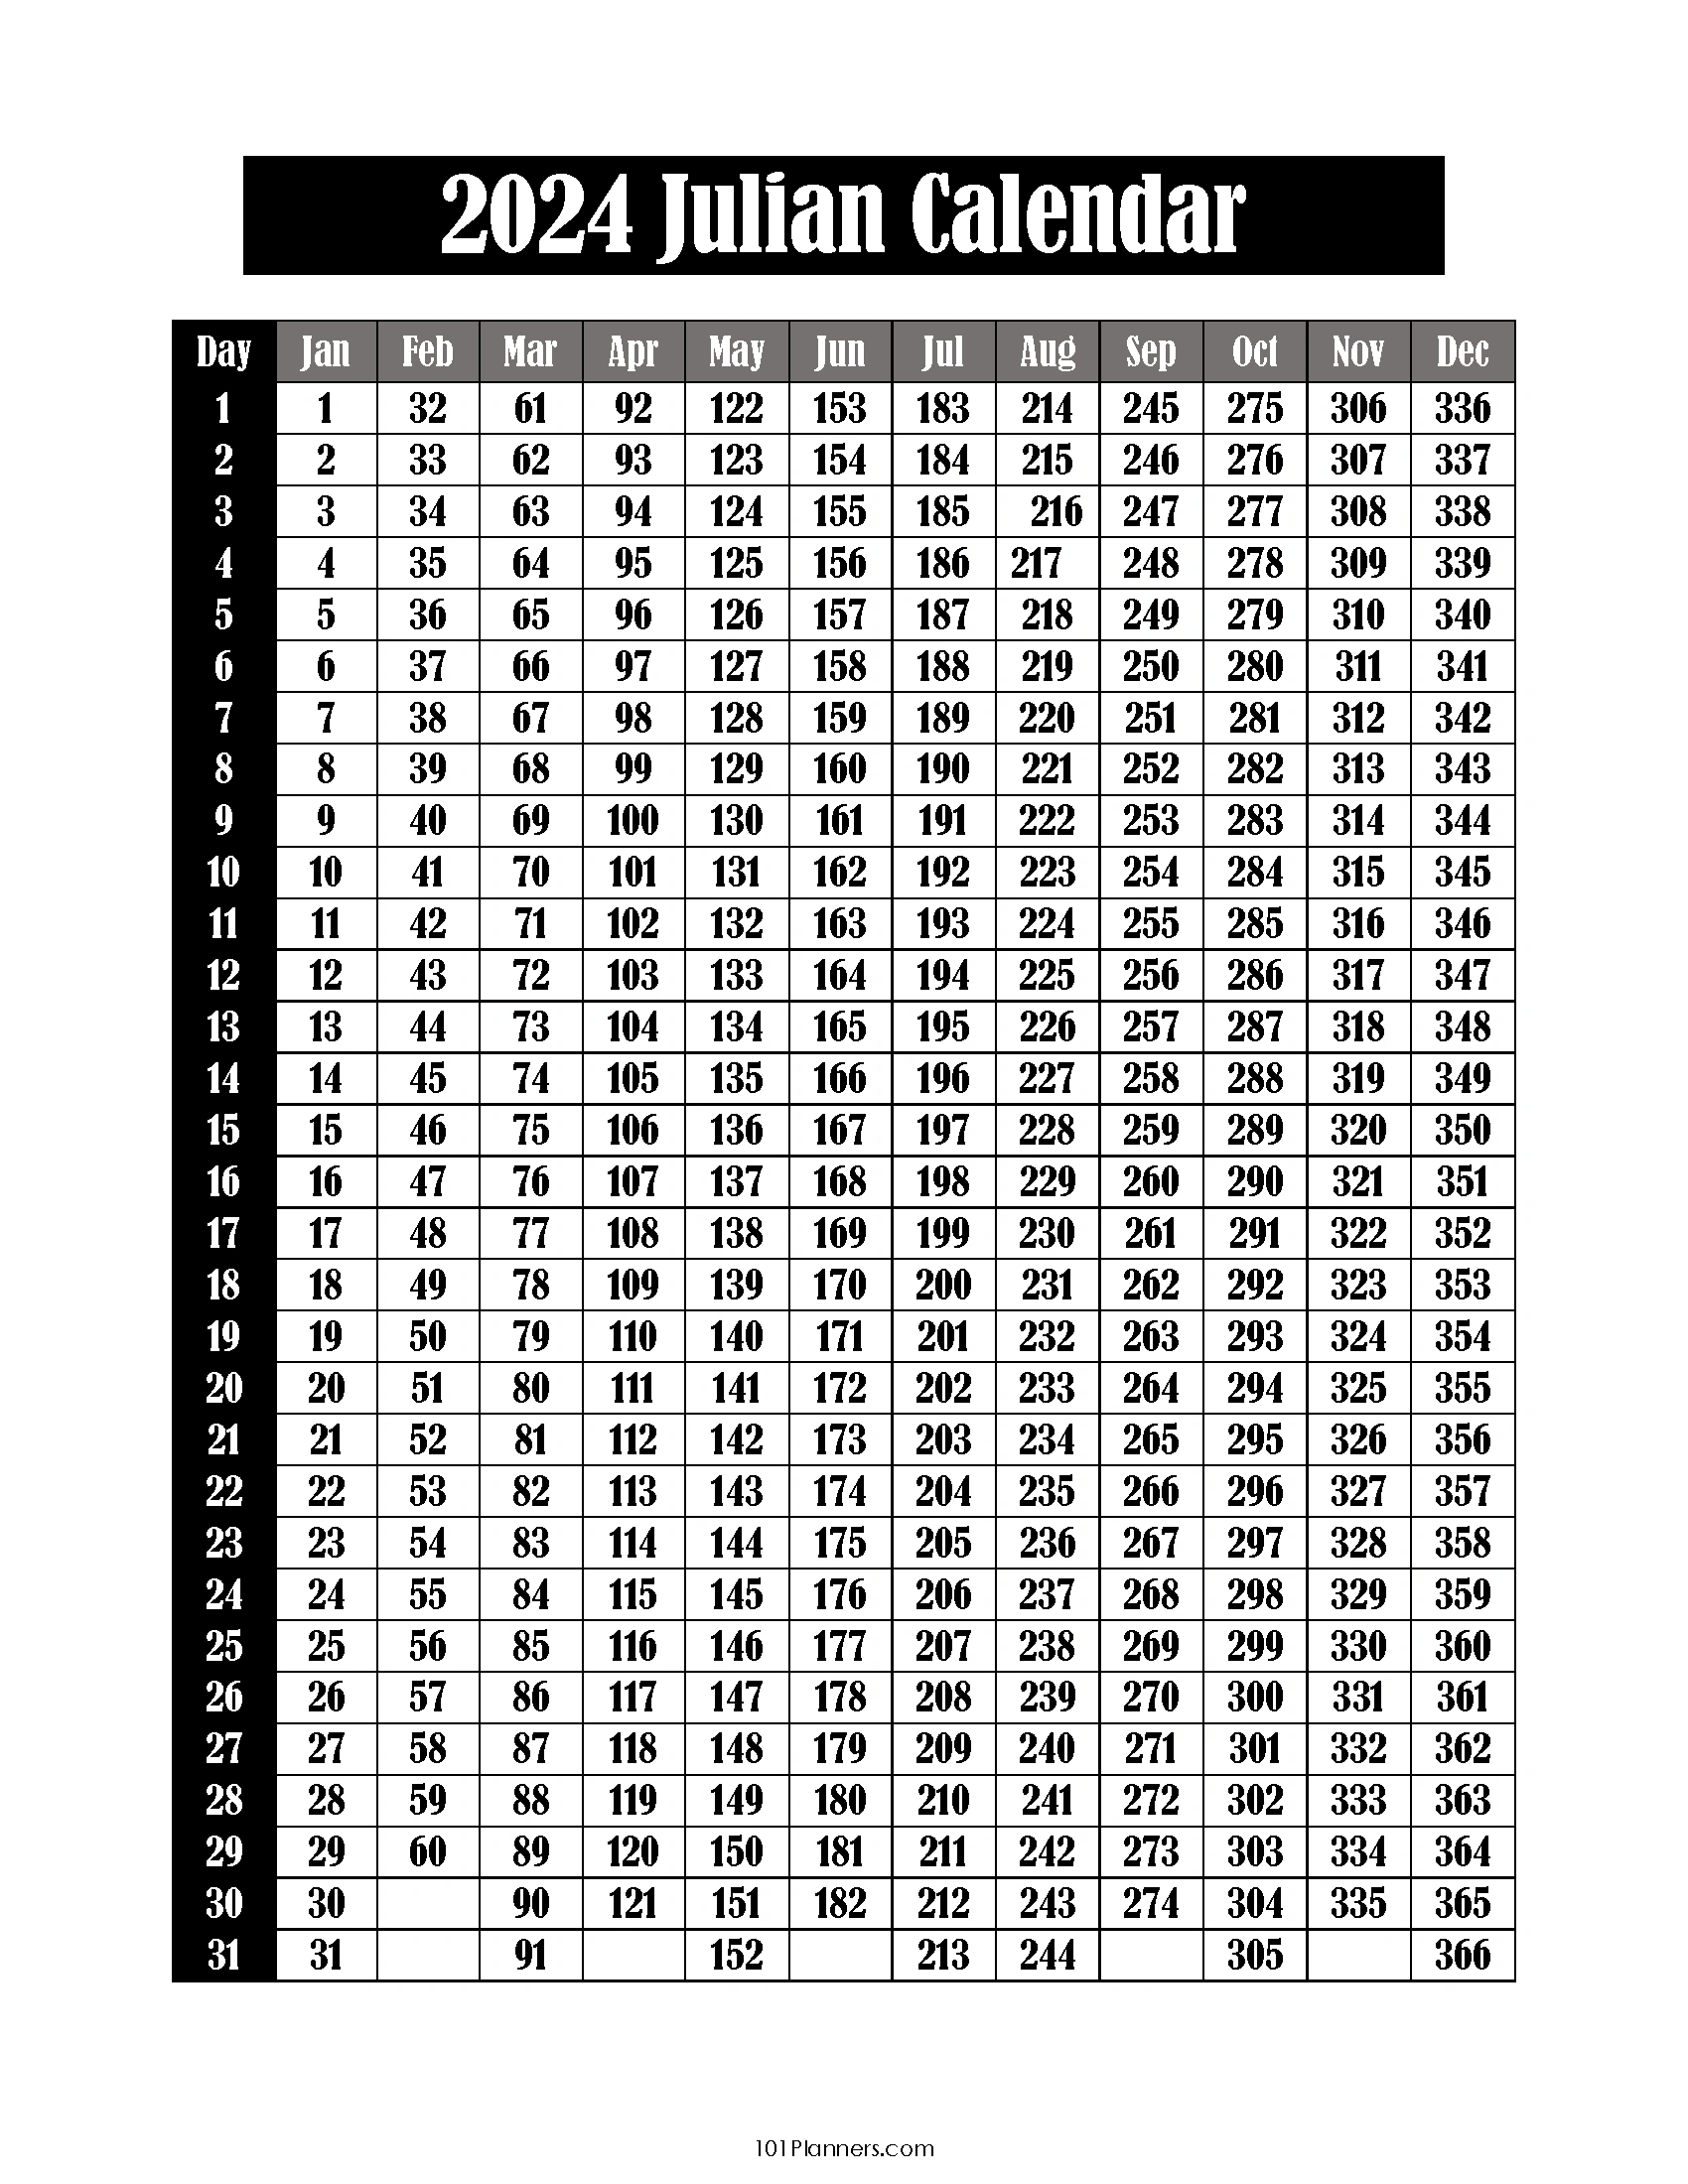 Free Printable Julian Calendar 2024-2032 | Julian Date Today intended for 2024 Calendar With Julian Dates